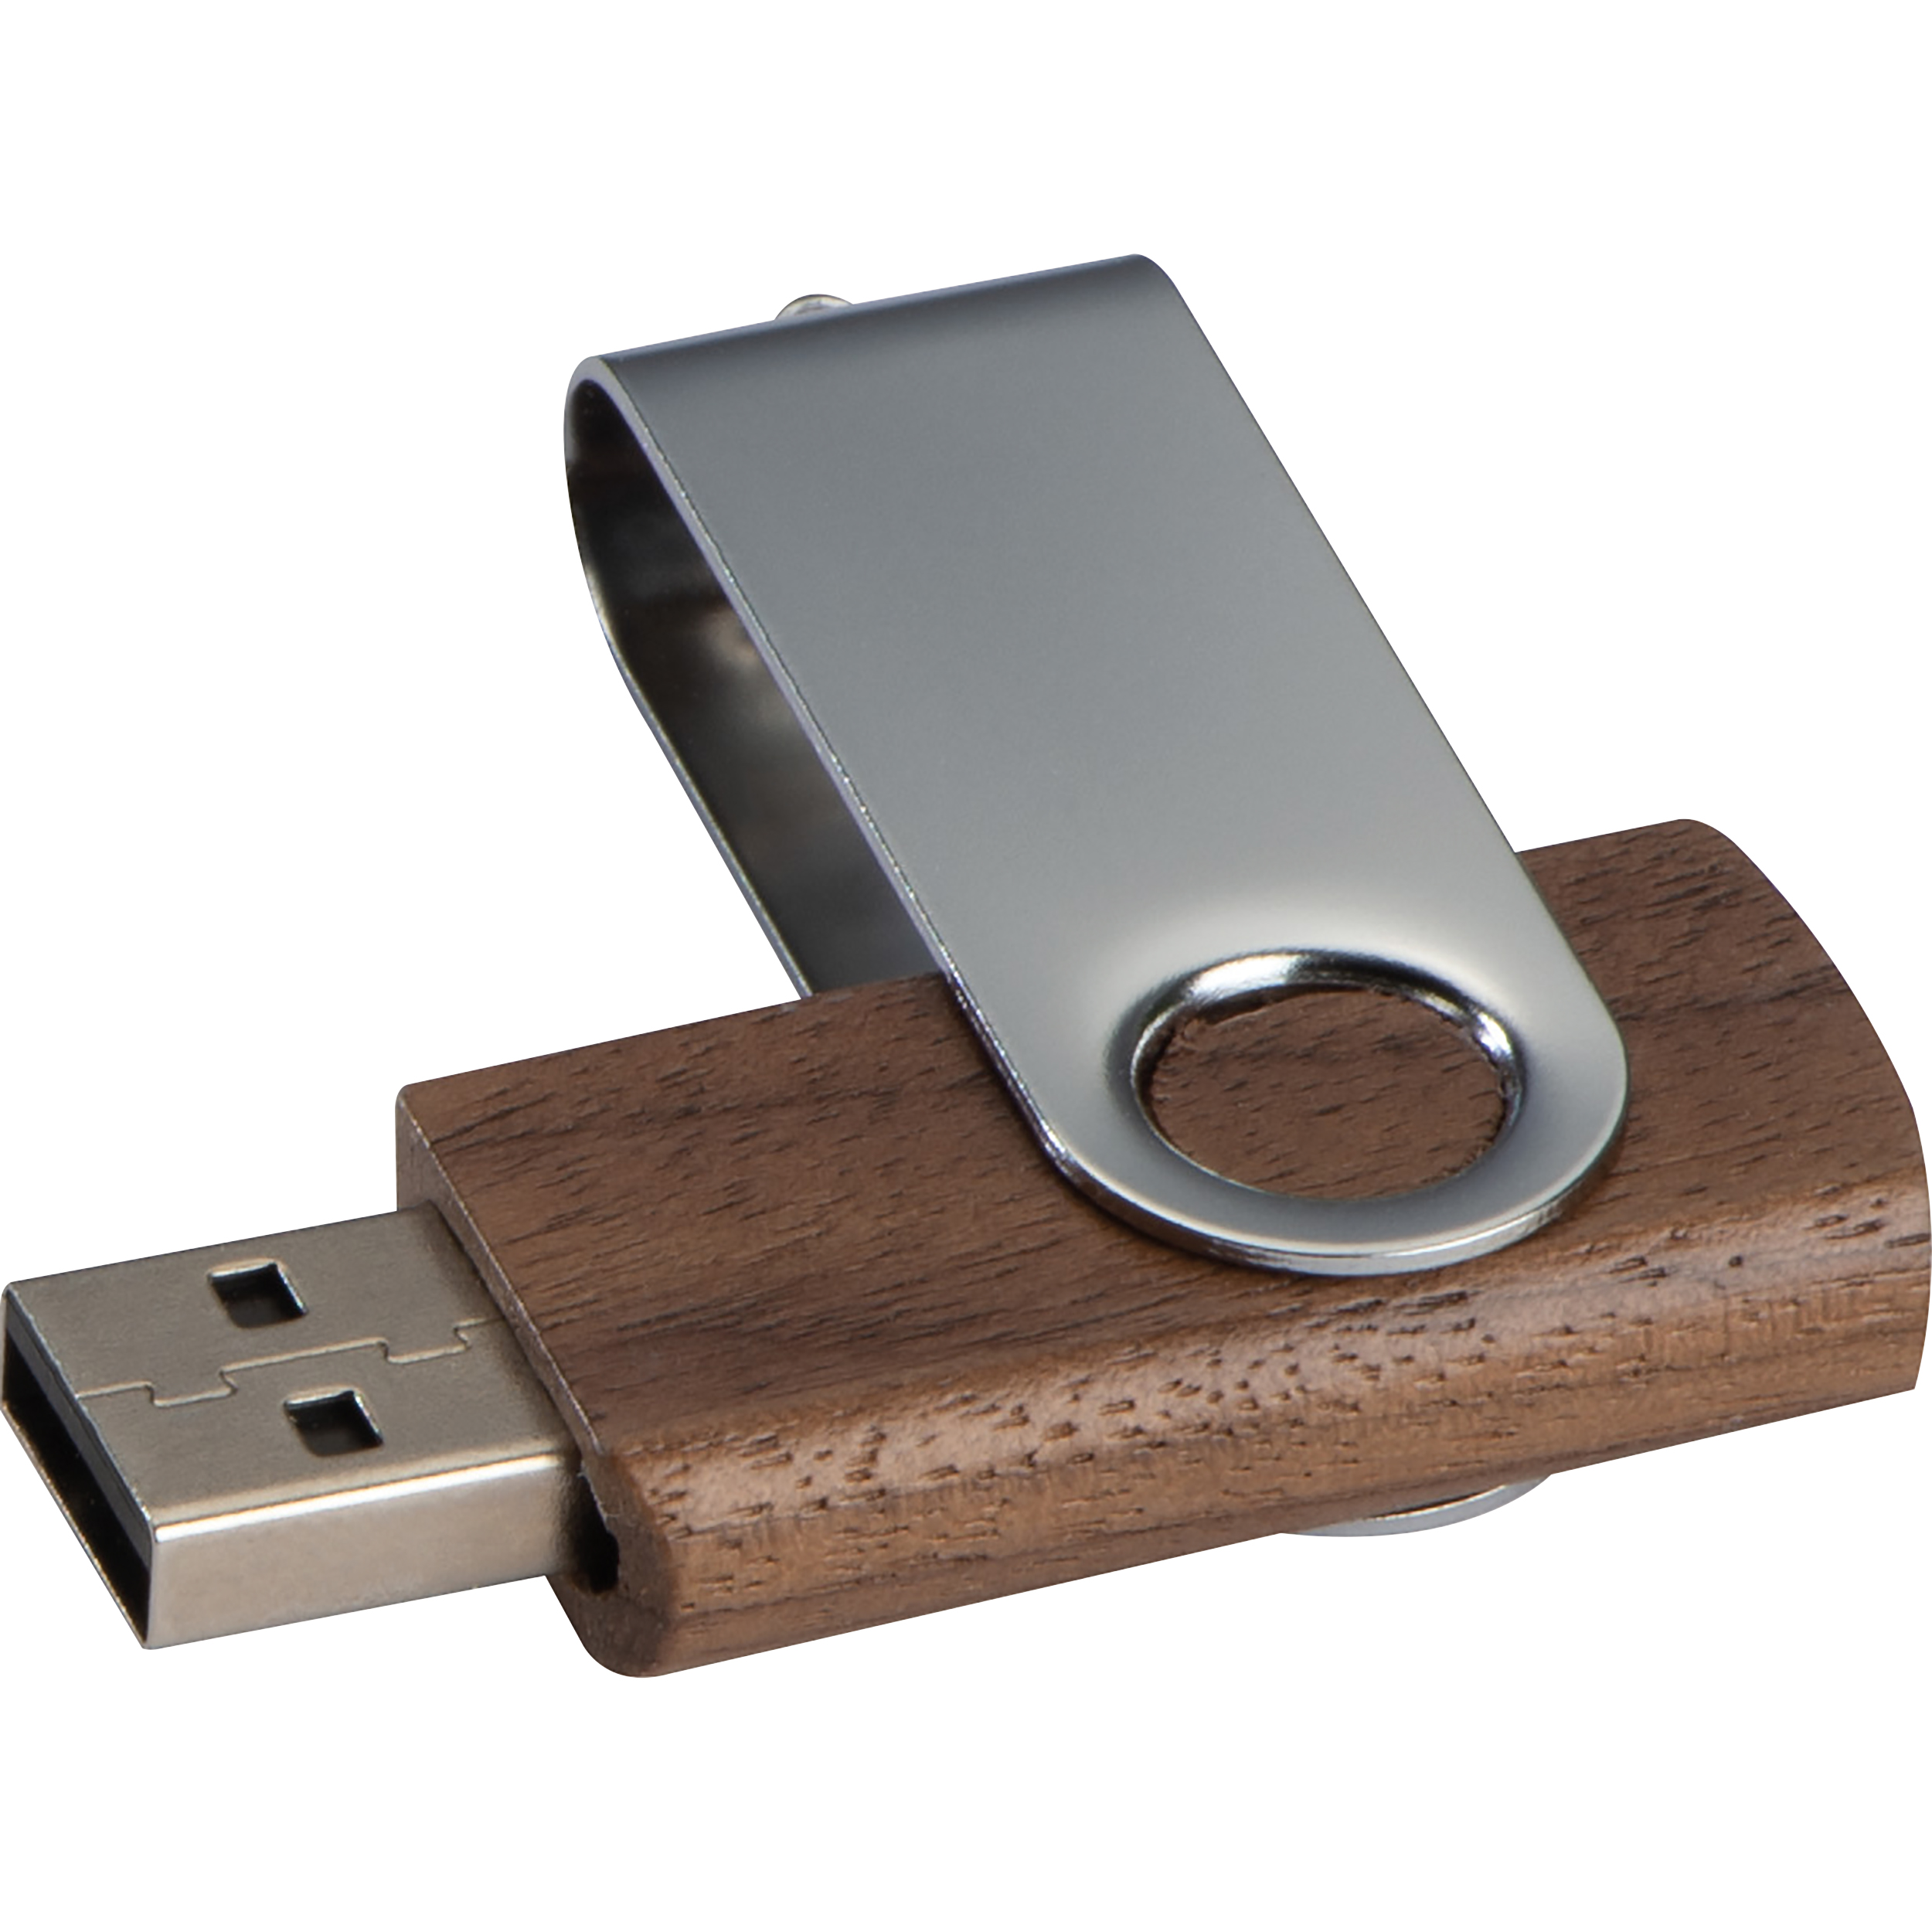 USB en noyer - Zaprinta France